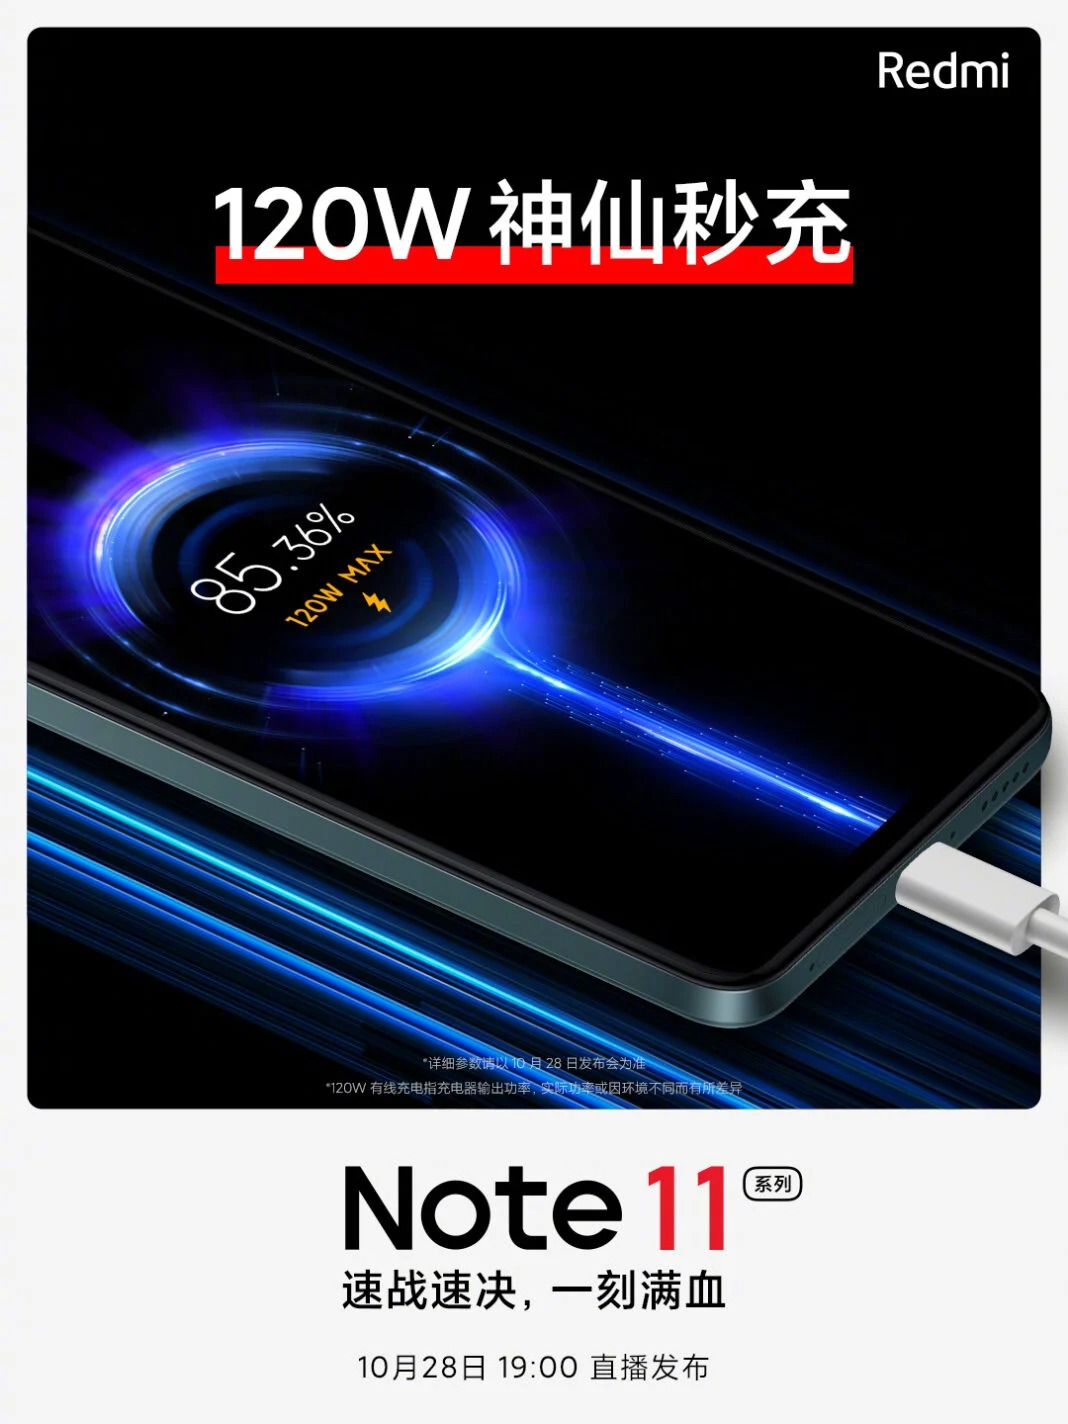 Redmi-Note-11-series-120W-fast-chargign-1068×1424-1